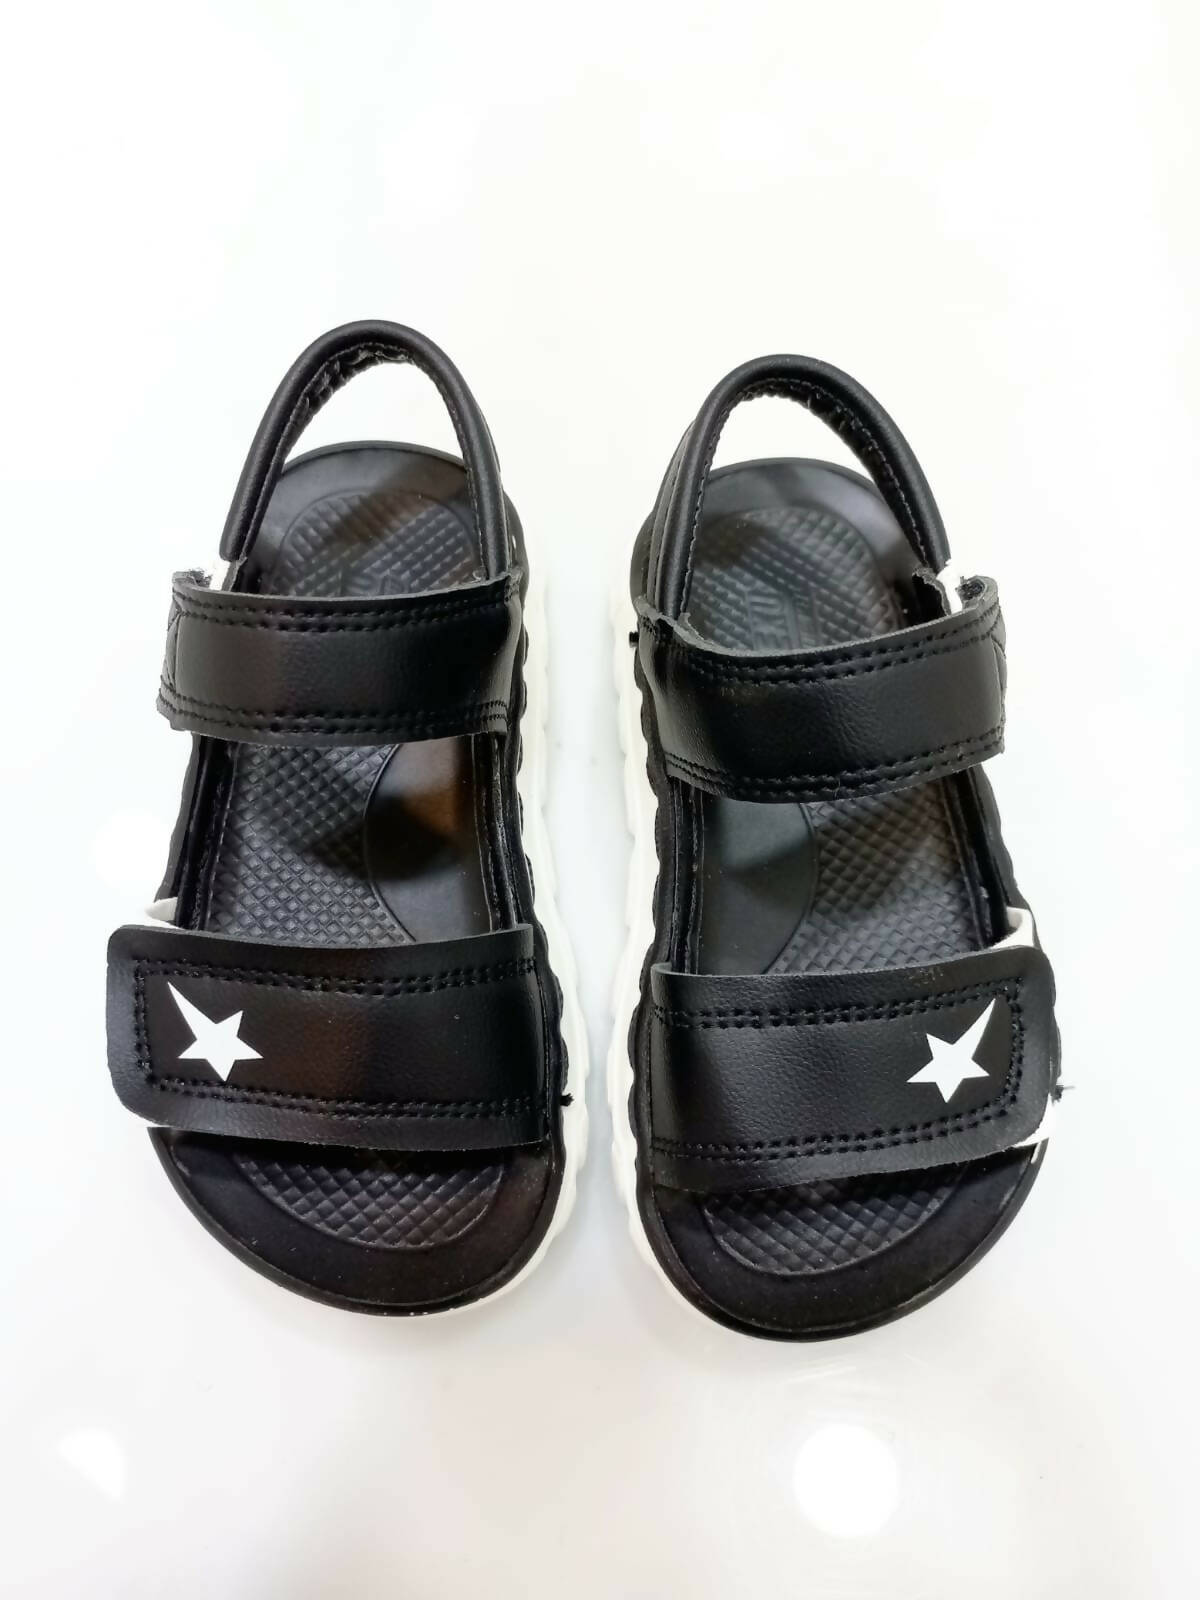 Latest Arrival Sandals for Kids Soft & Comfortable Waterproof Anti slip Backstrap sandals